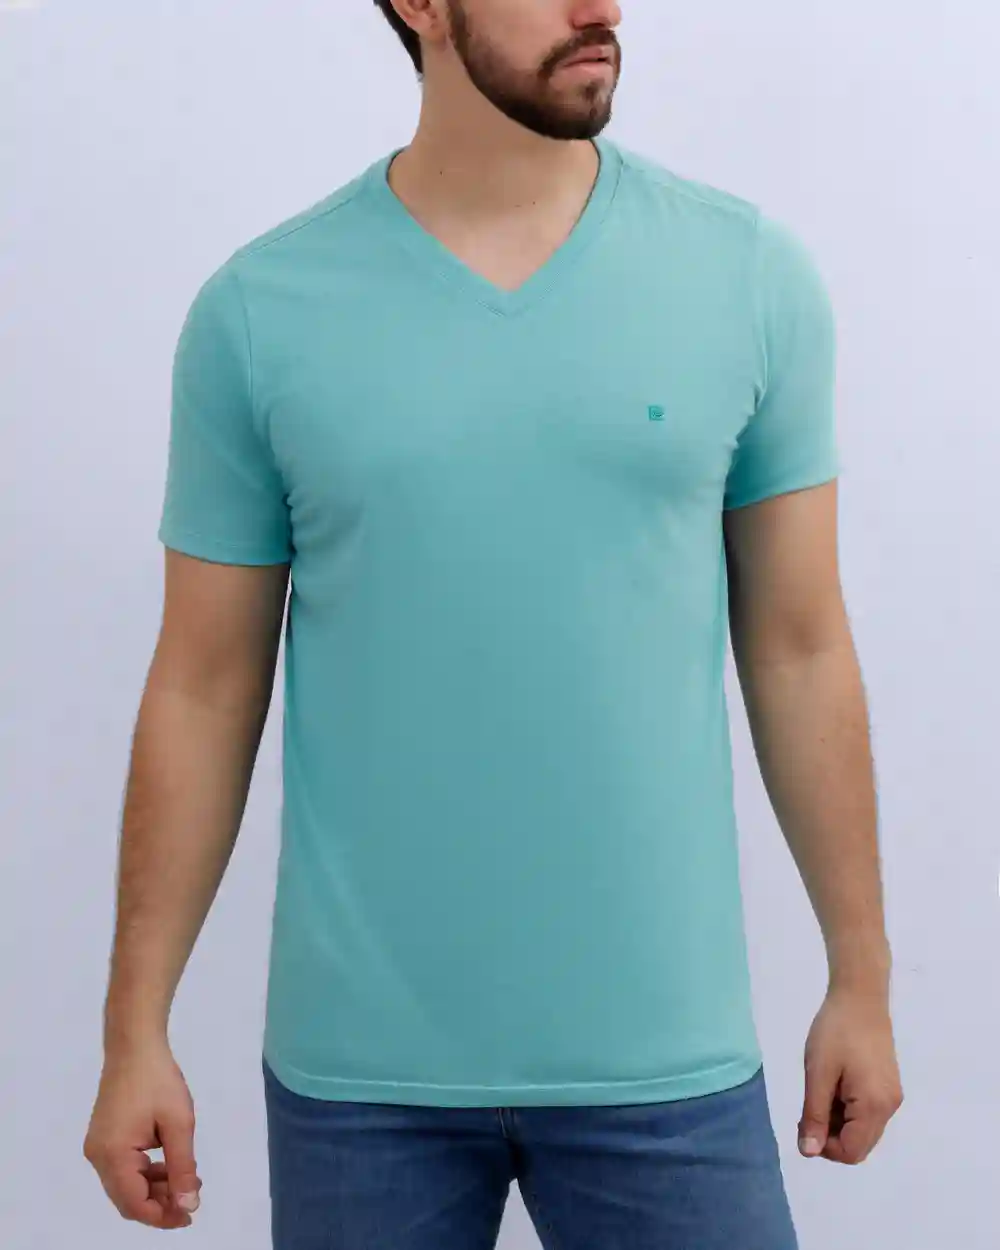 Camiseta cuello v lisa manga corta color celeste